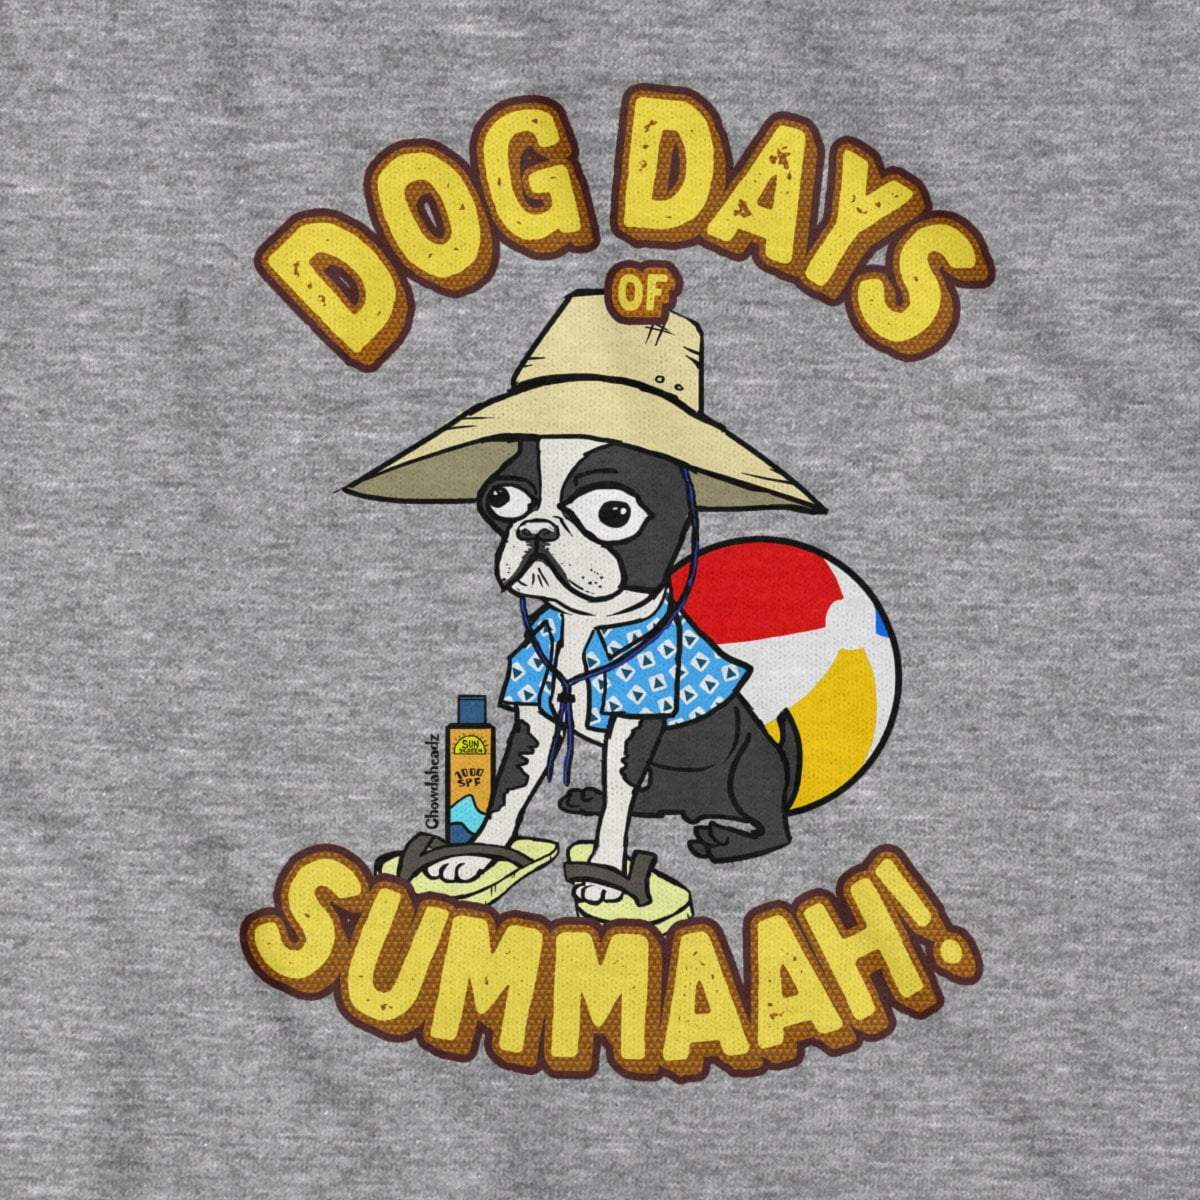 Dog Days of Summaah T-Shirt - Chowdaheadz